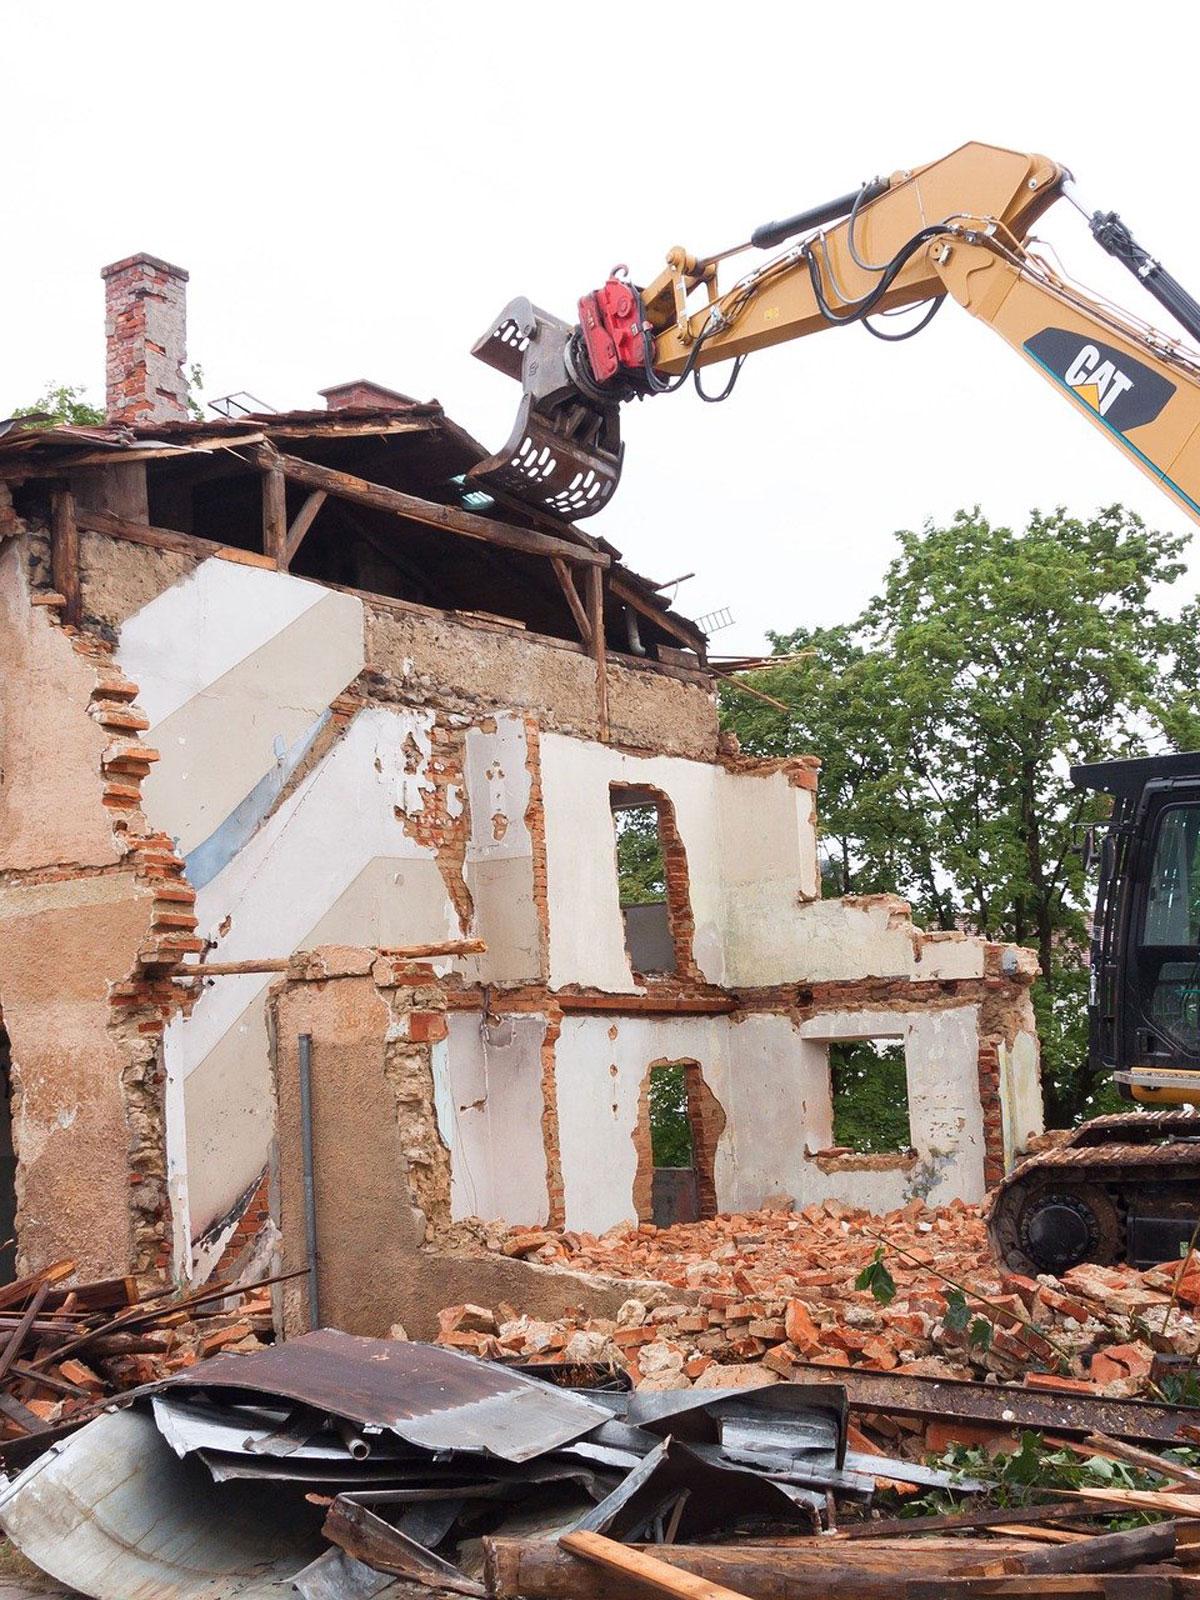 APlus Lawnpros Demolition Excavation